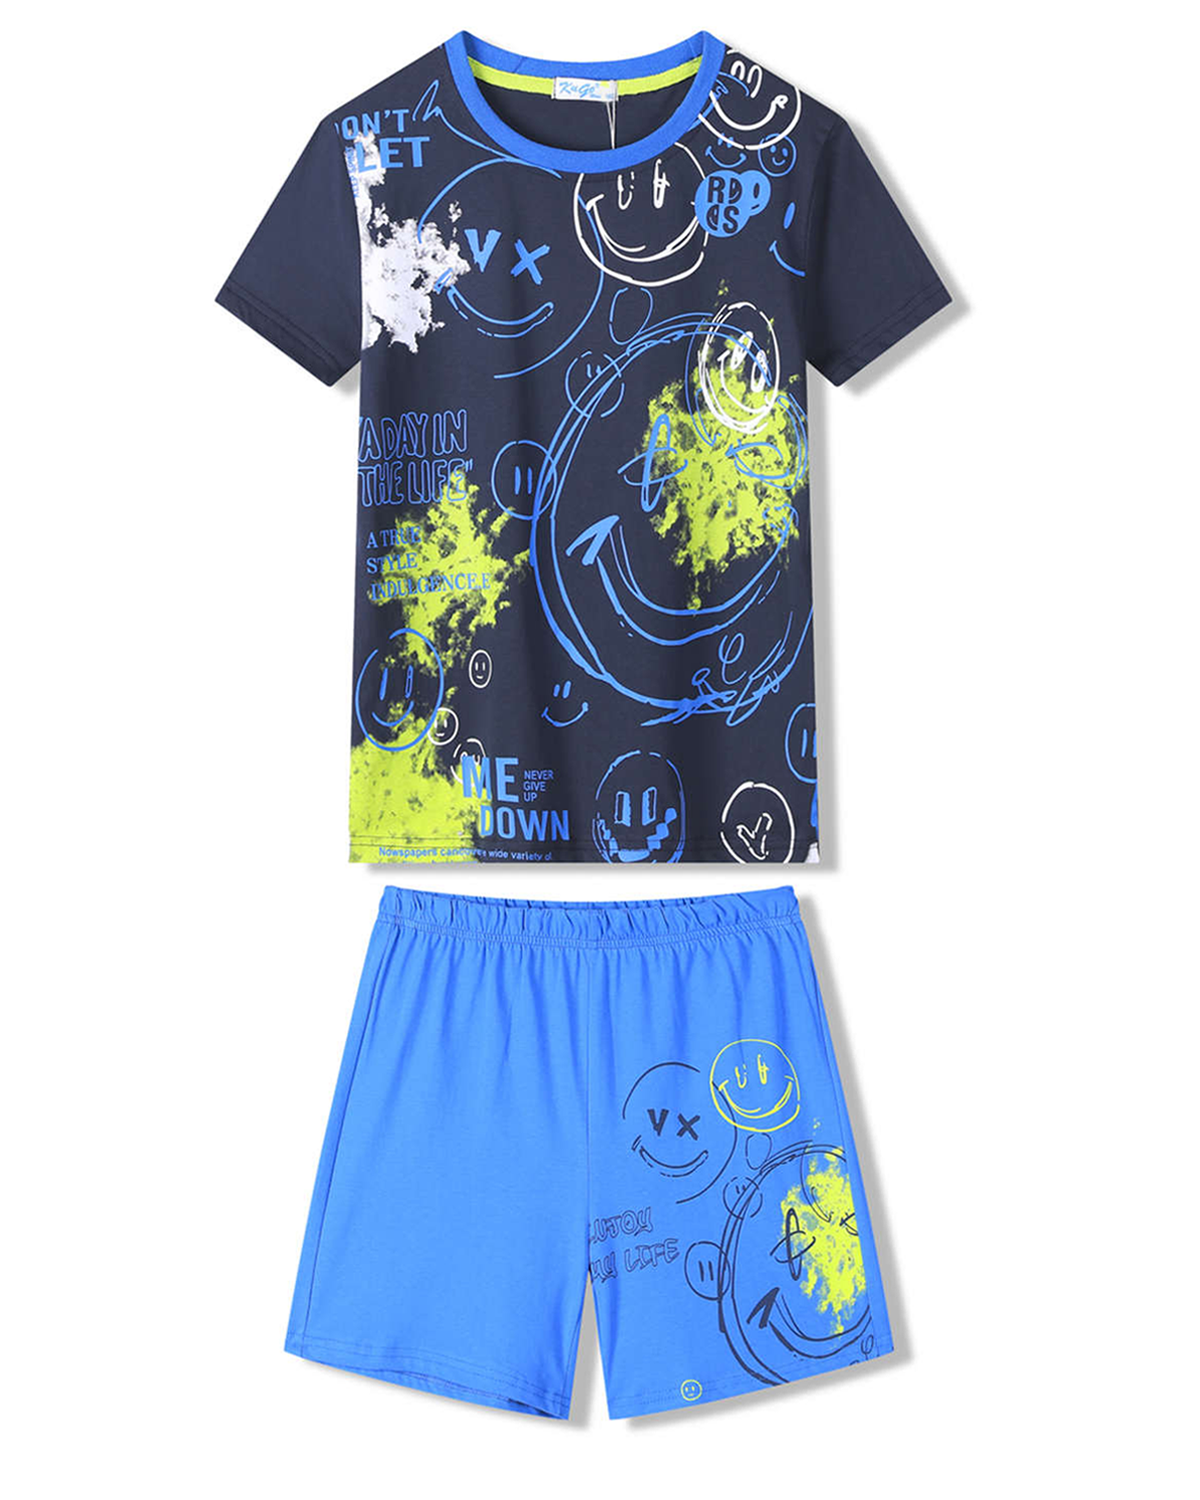 Chlapecké pyžamo - KUGO WT7316, tmavě modrá Barva: Modrá tmavě, Velikost: 140